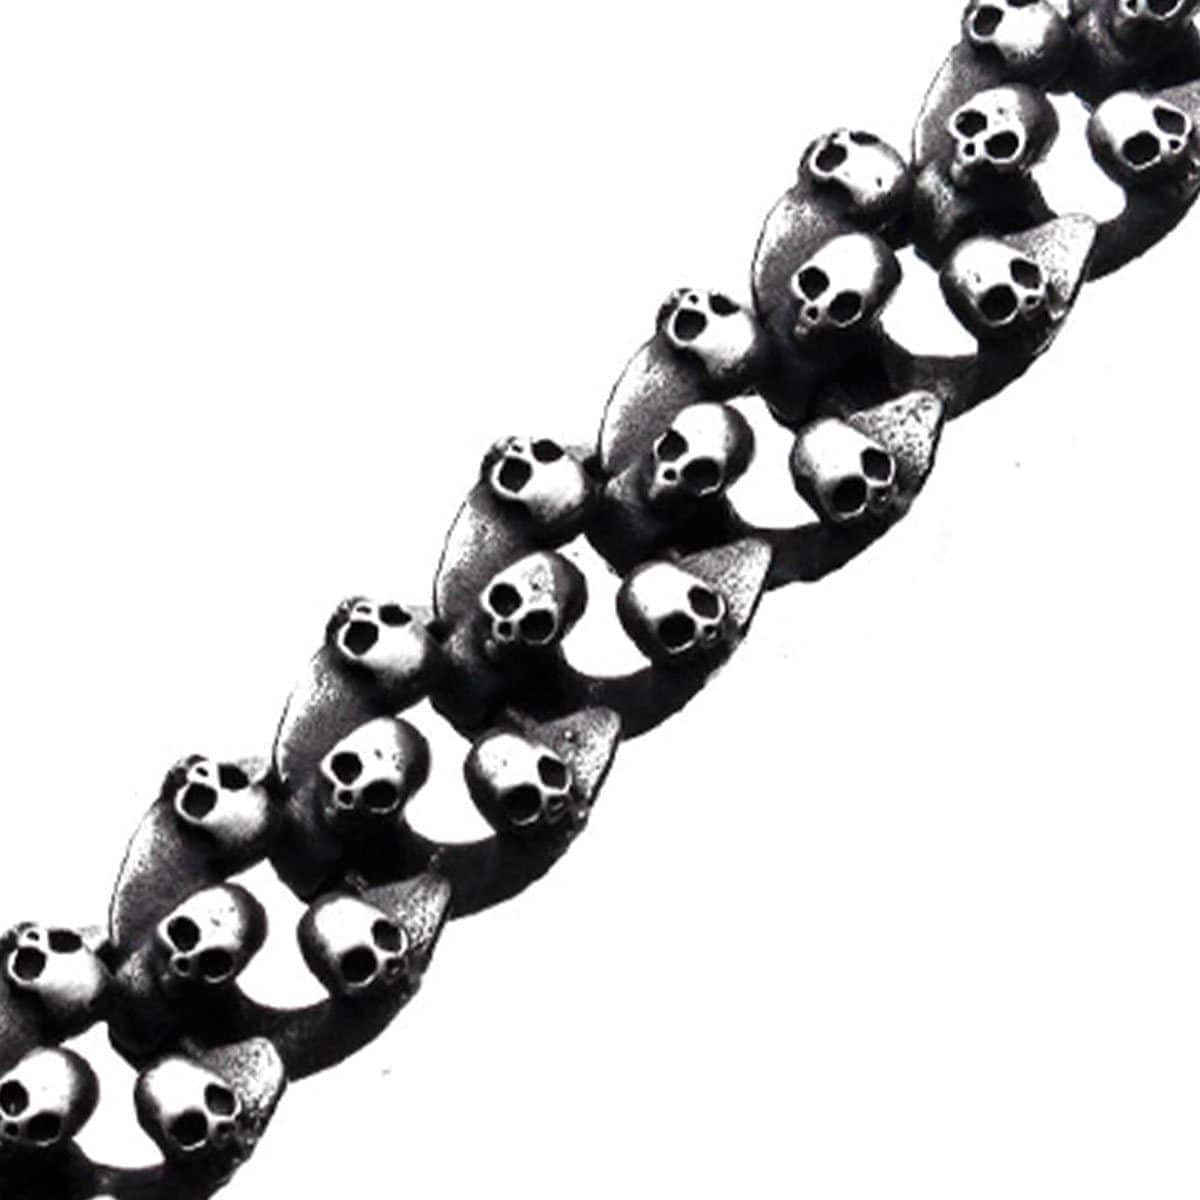 INOX JEWELRY Bracelets Antiqued Silver Tone Stainless Steel Brushed Mountain of Skulls Bracelet BR4016